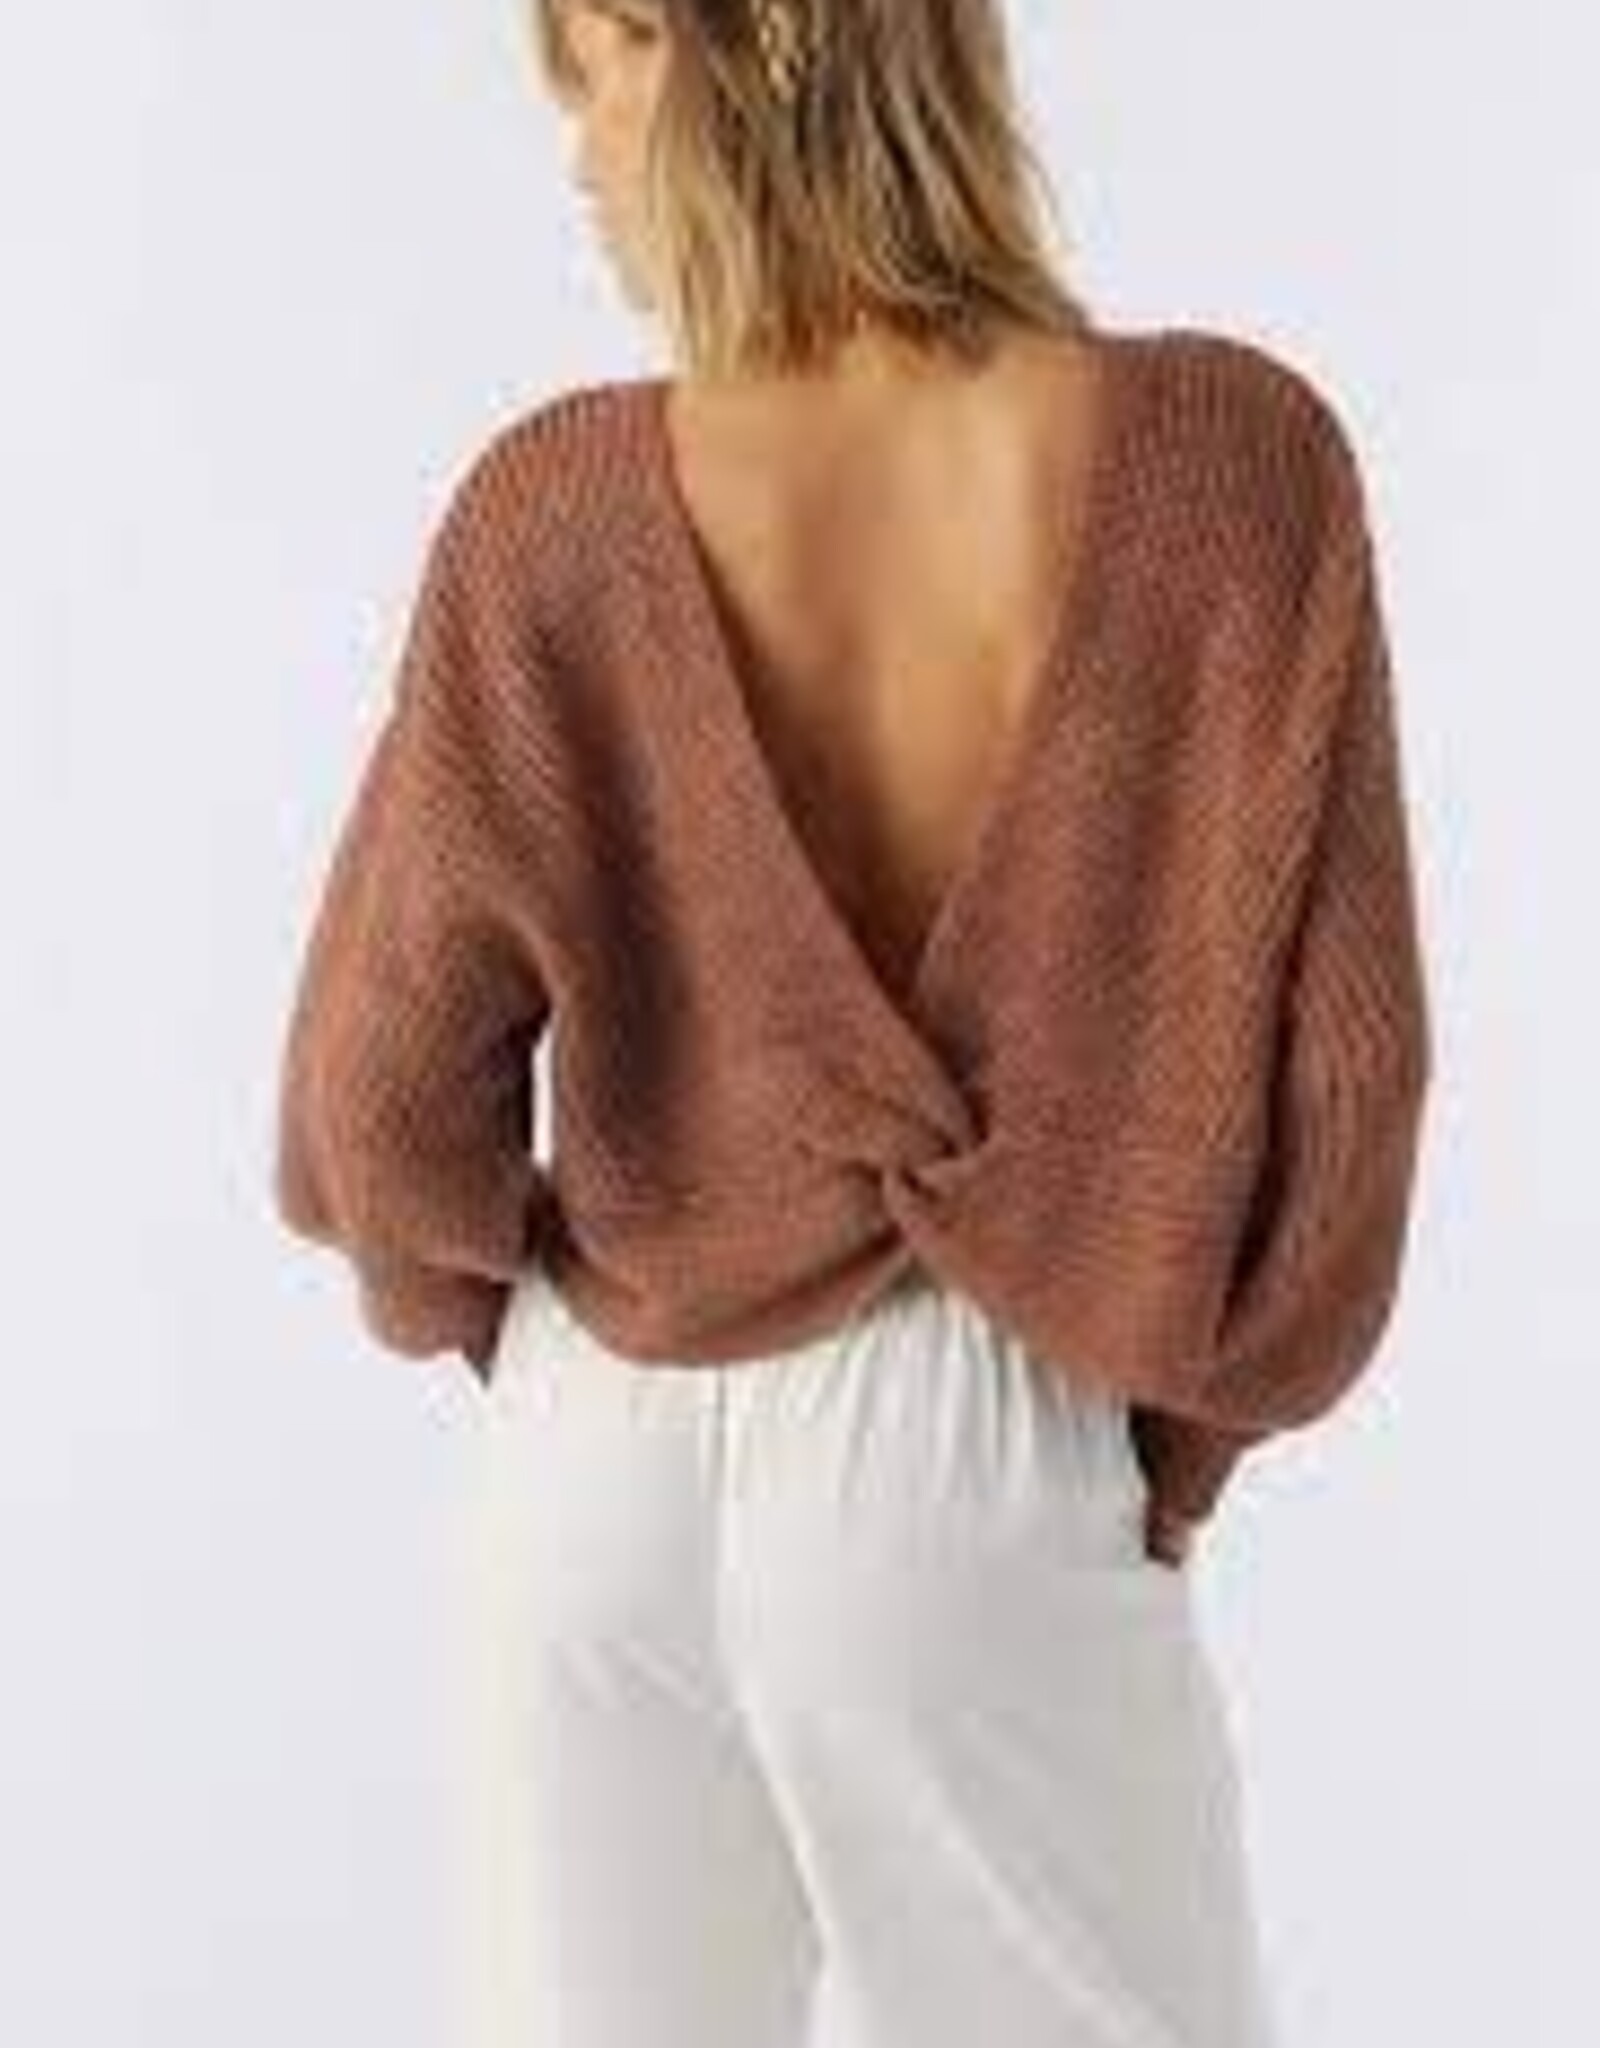 oneill Oneill Hillside Twist Front Revo Sweater Top- FA3417013